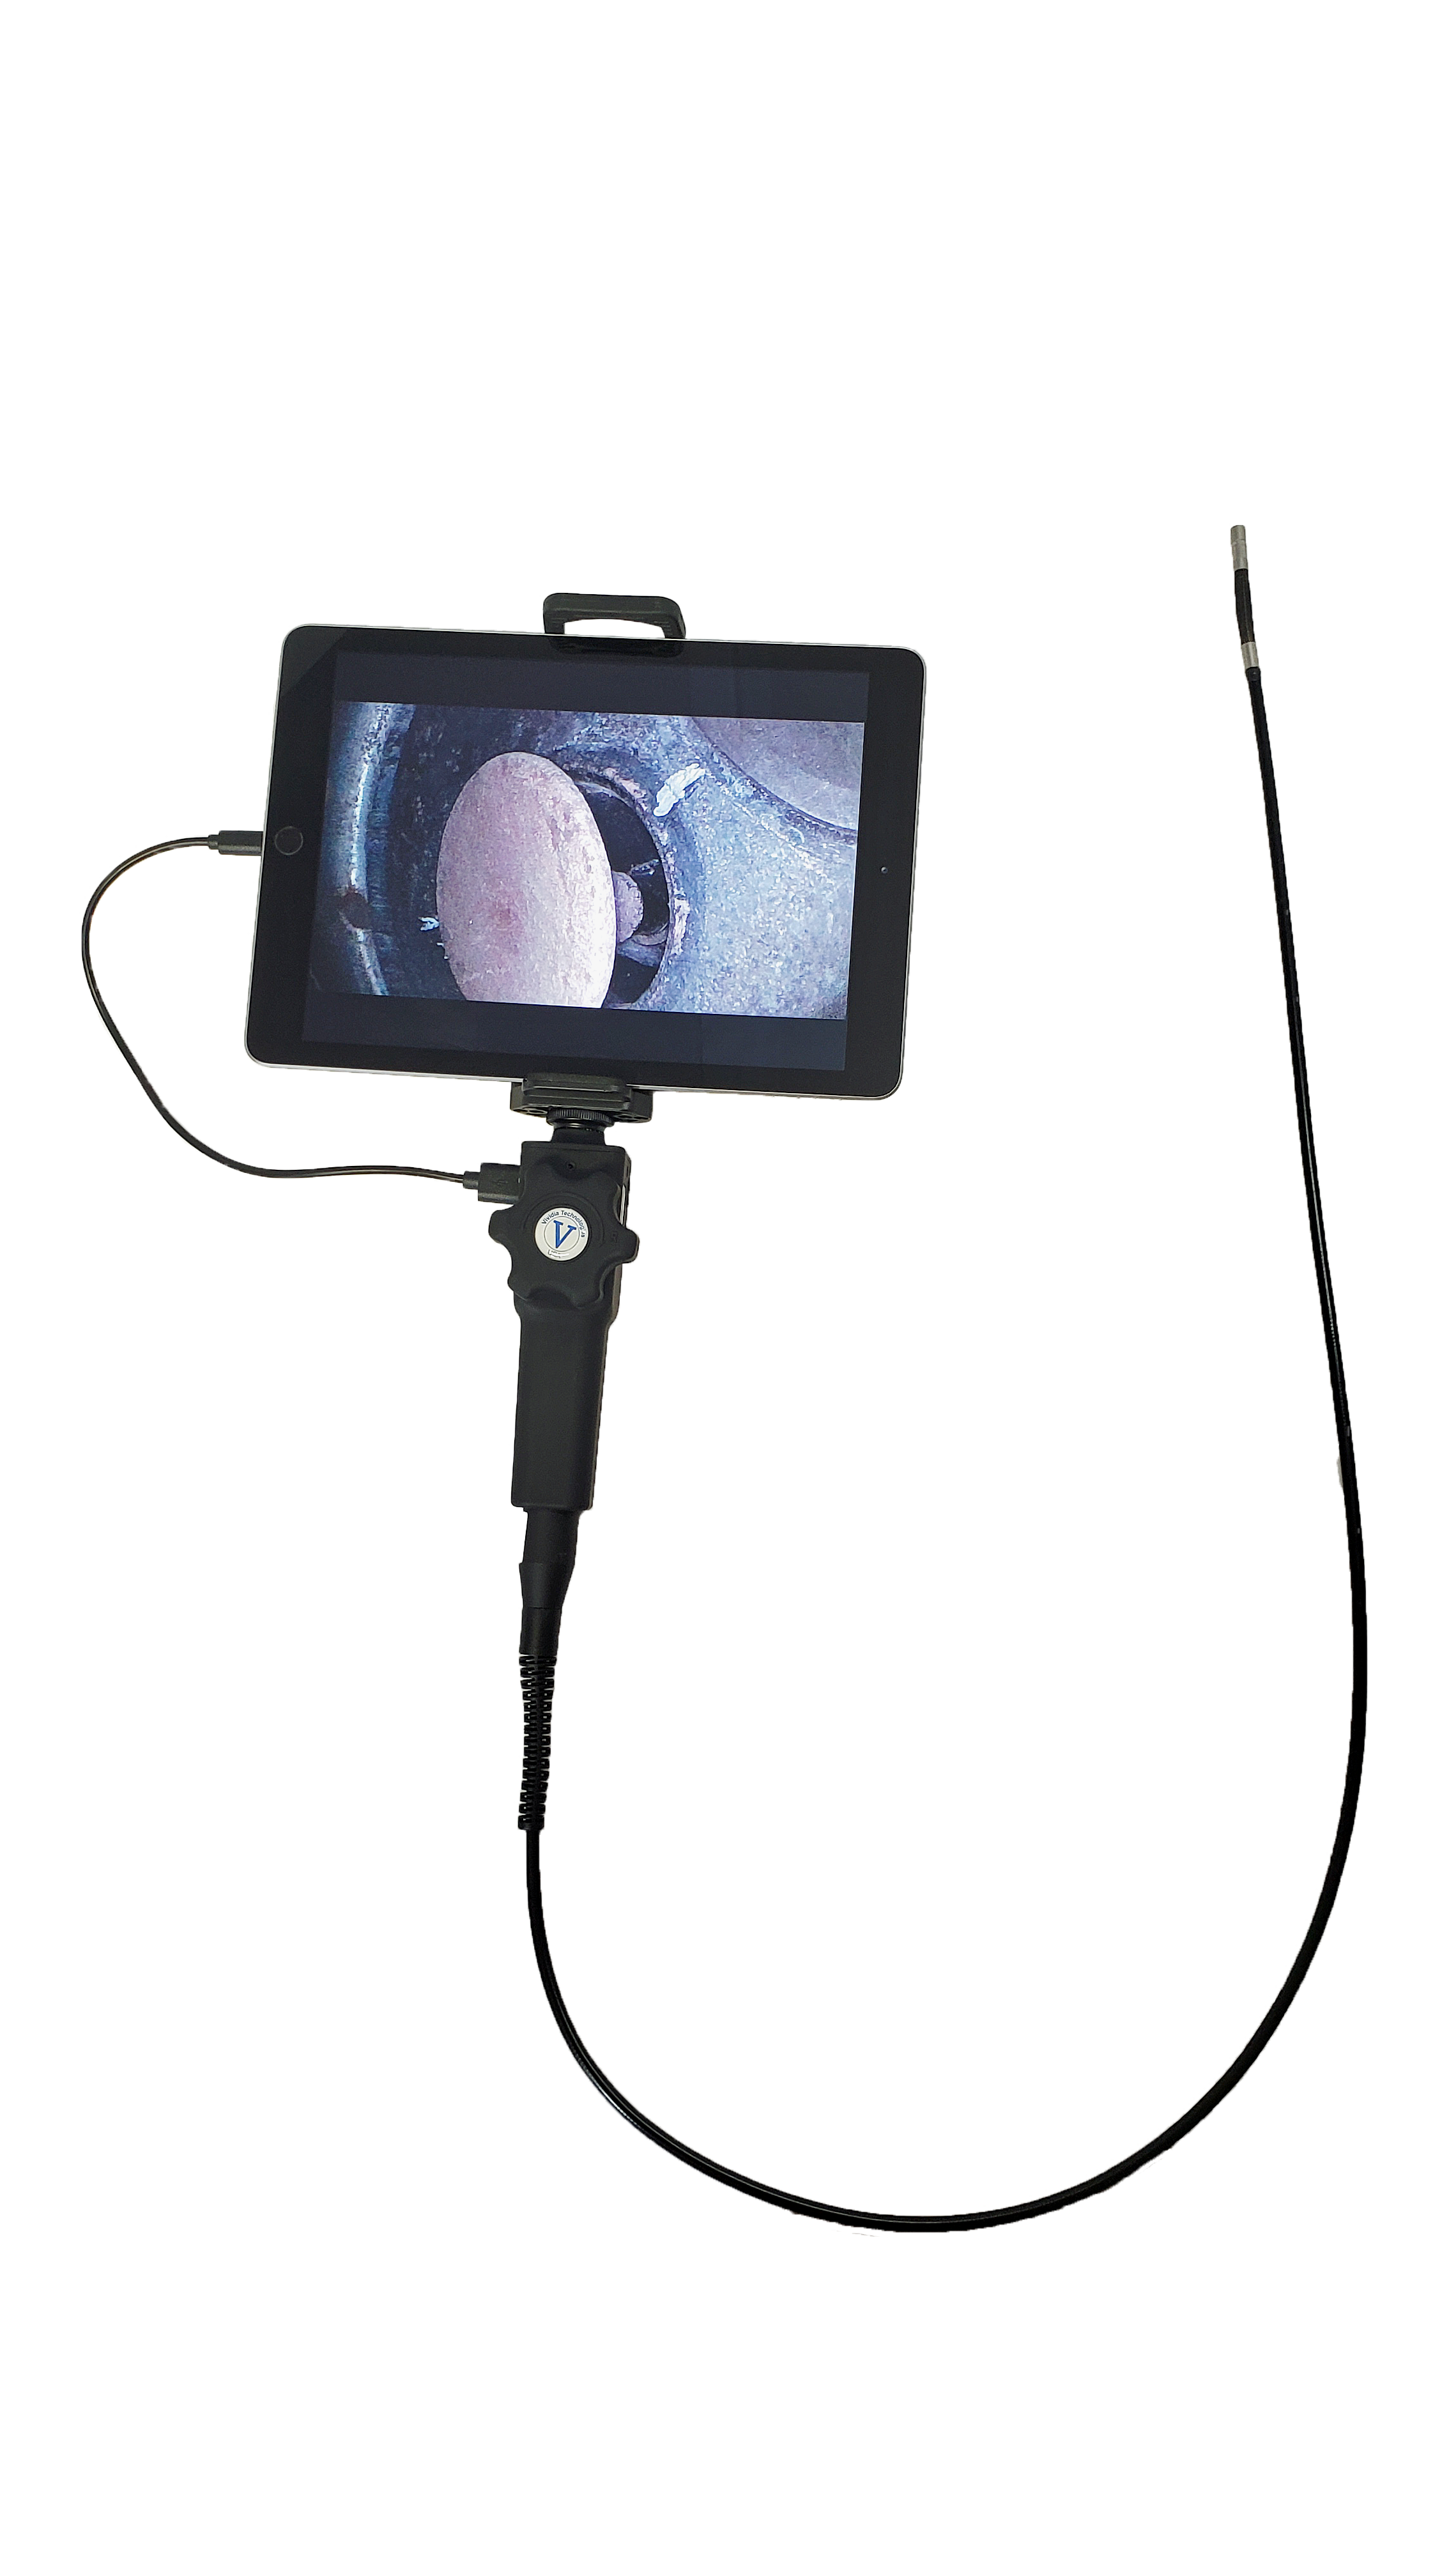 Vividia WiFi Wireless 9mm Waterproof Flexible Inspection Camera Borescope Endoscope for iPhone/iPad/Android 